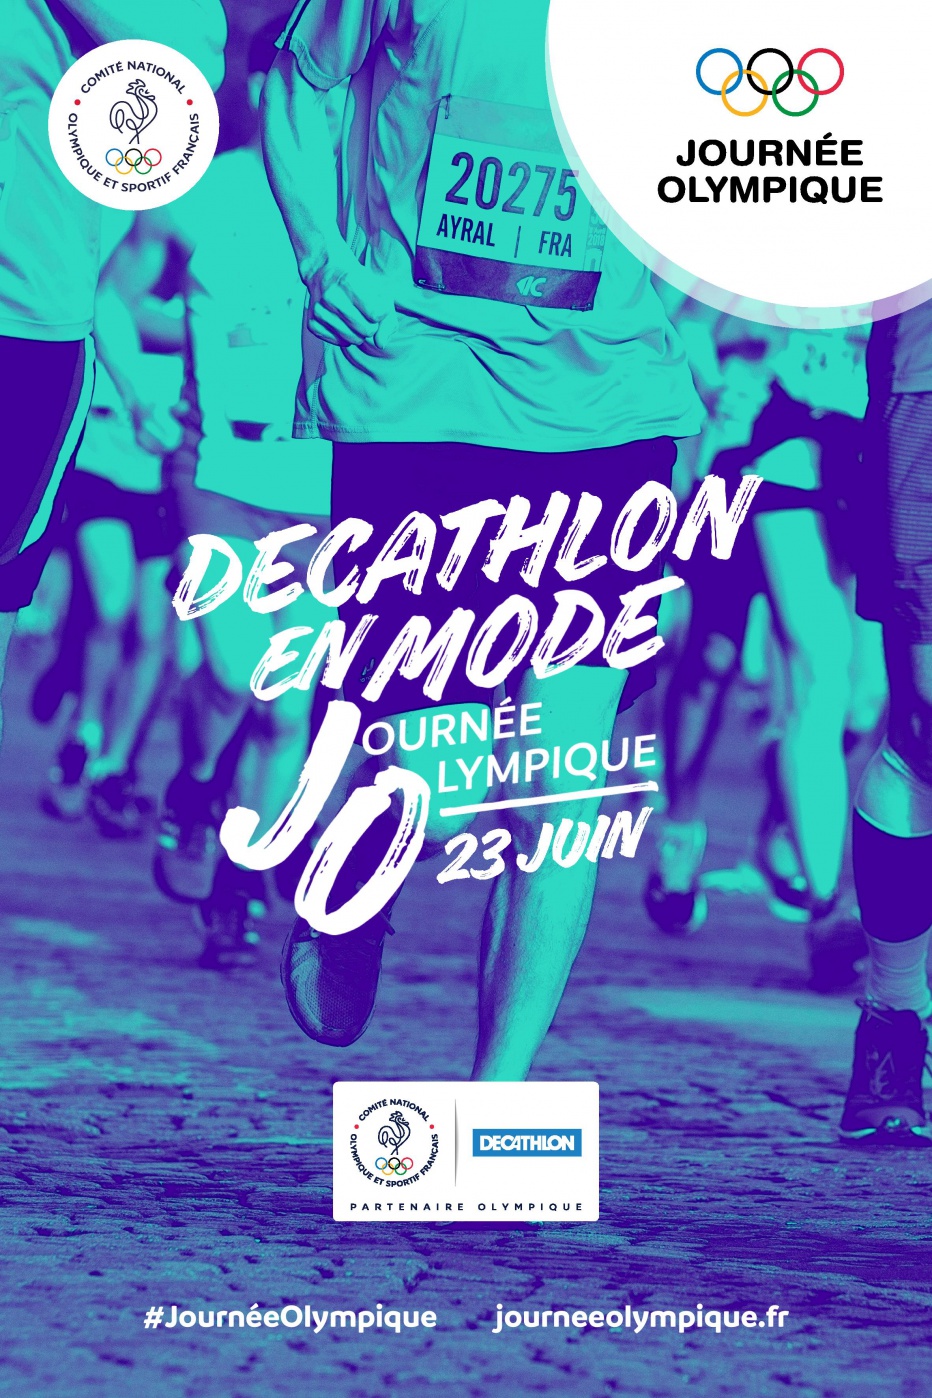 Decathlon,Décathlon, sport, journee olympique, olympisme, CNOSF, 23 juin, olympique, paralympique, sport pour tous